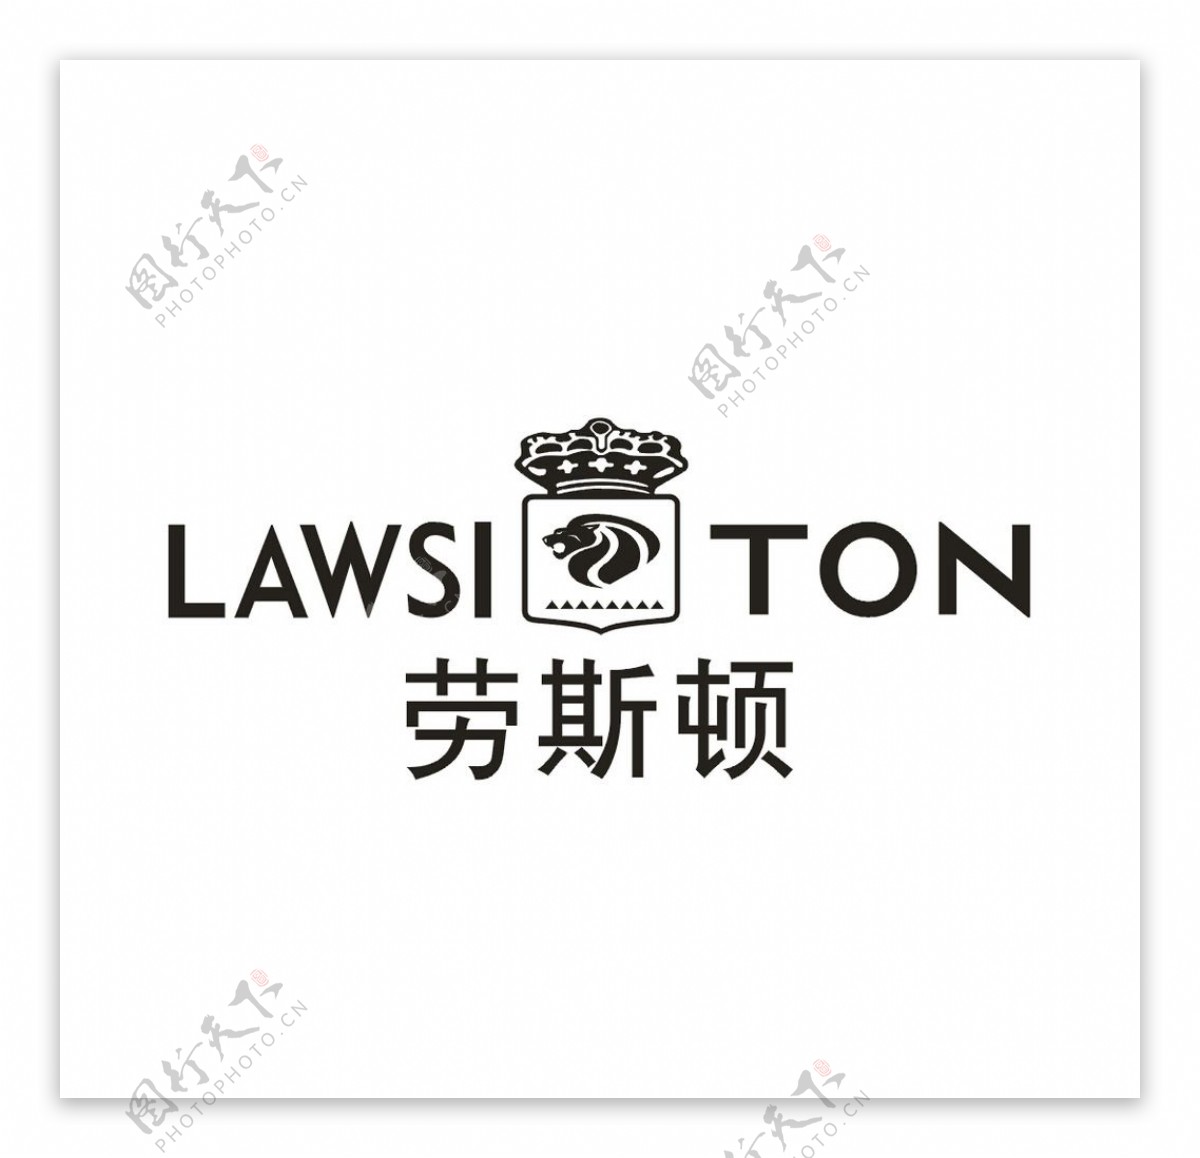 劳斯顿lawsiton标志